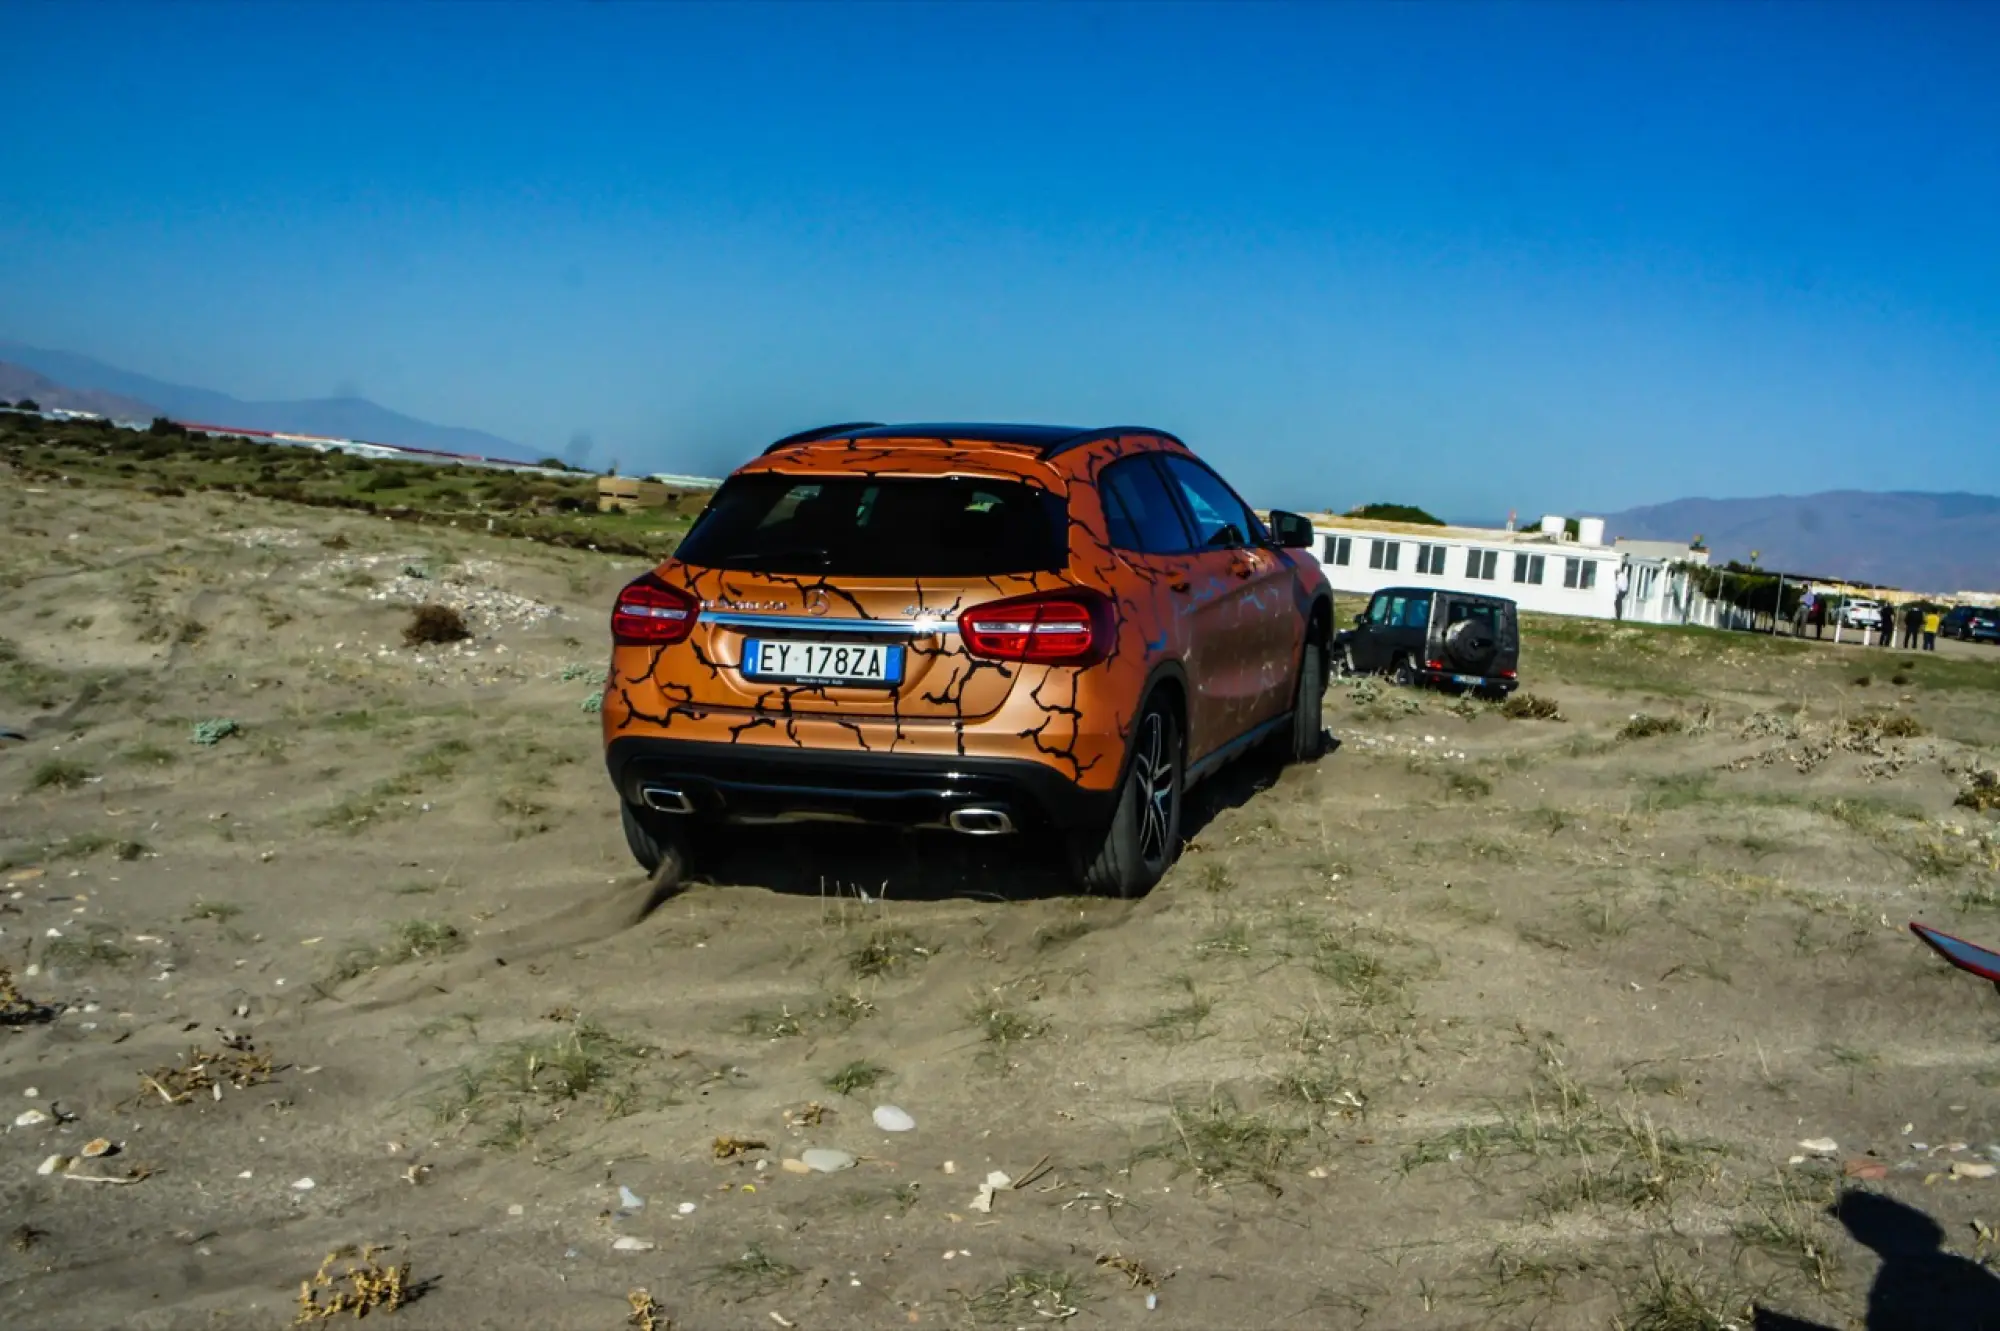 Mercedes SUV Attack Desert Test Drive - 99